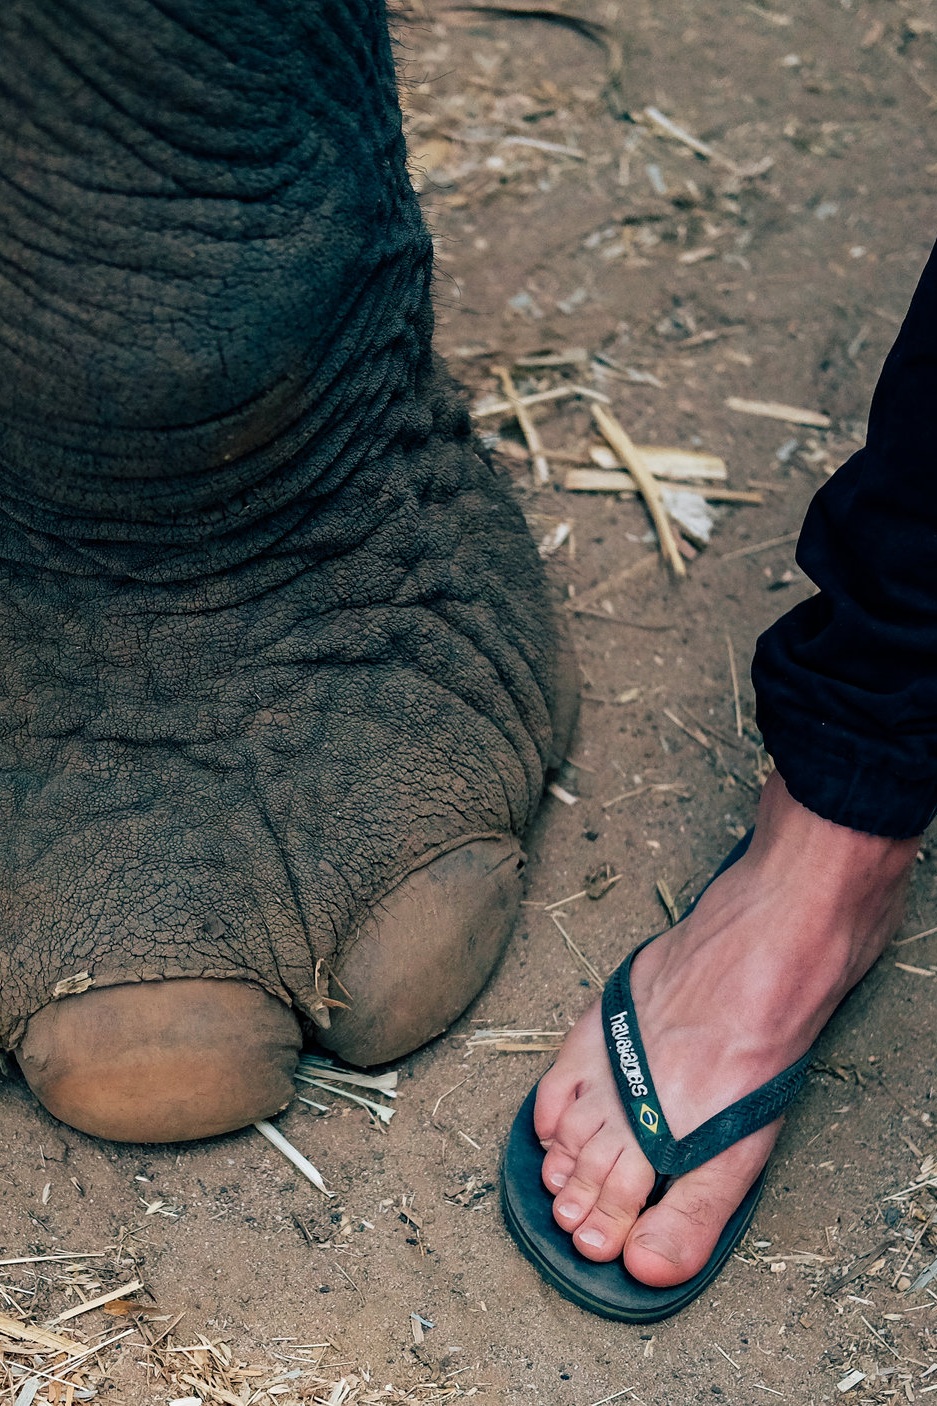 Elephant foot vs. human foot